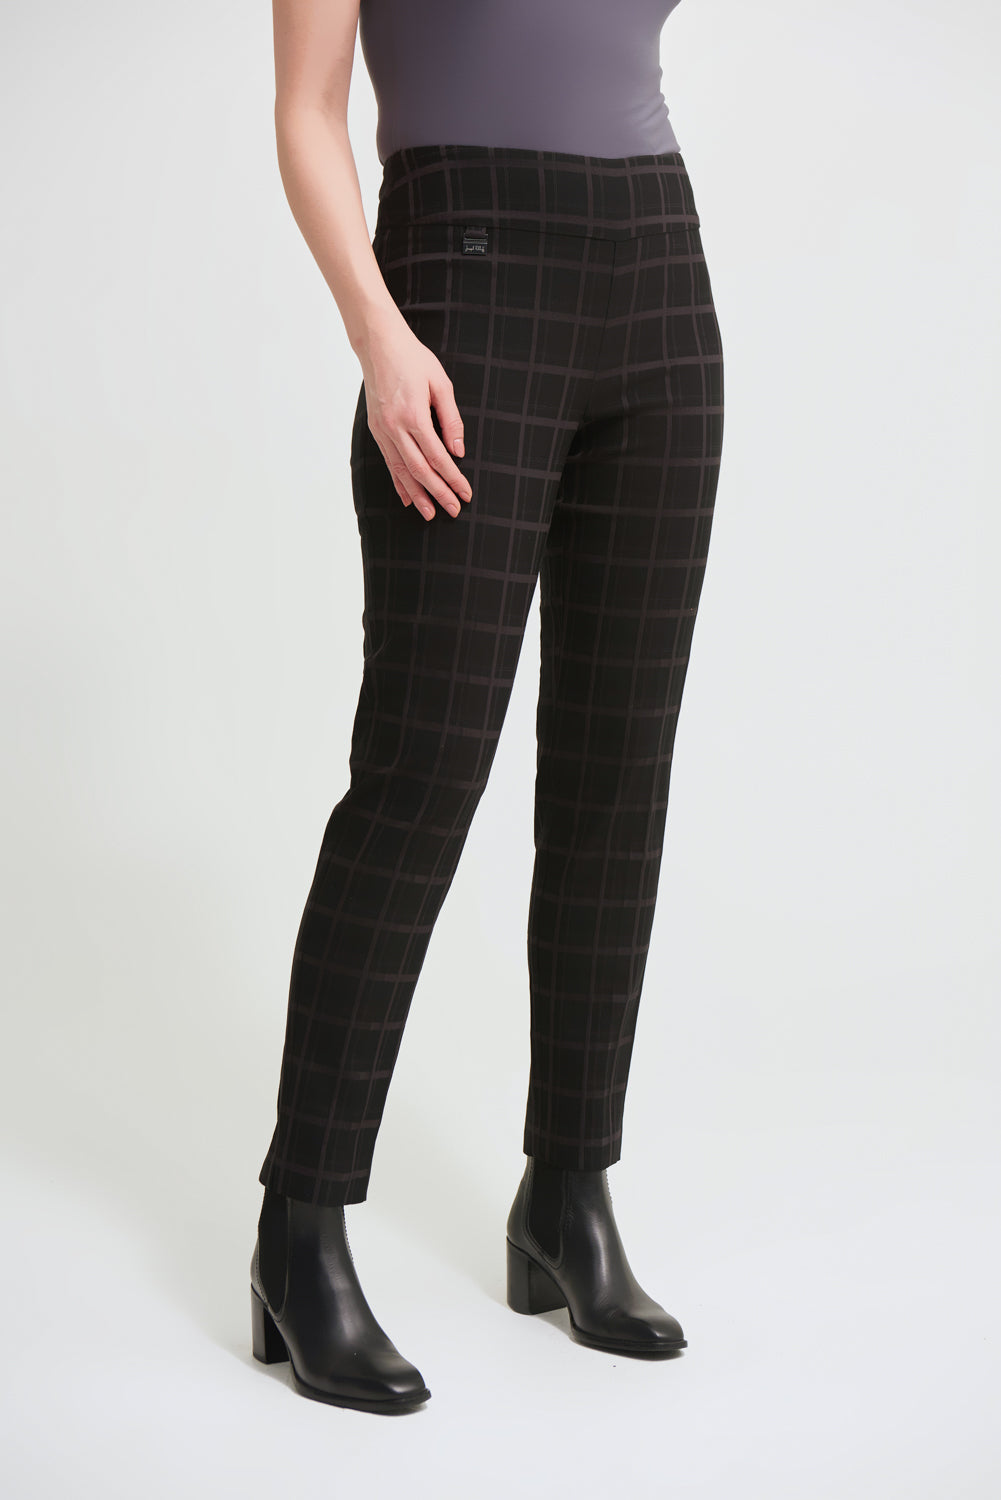 Joseph Ribkoff Black Pull-On Pant Style 214156